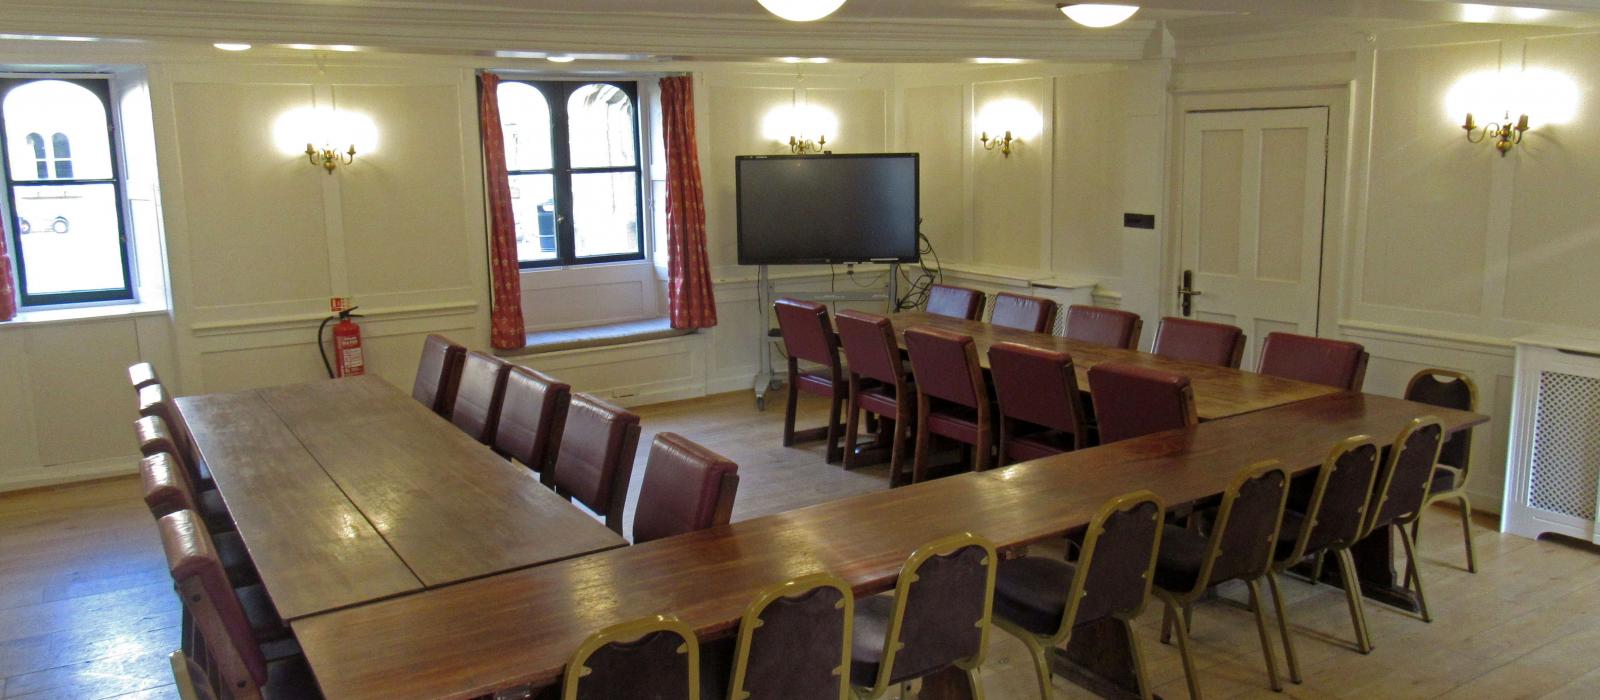 Lecture Room VII, Brasenose College